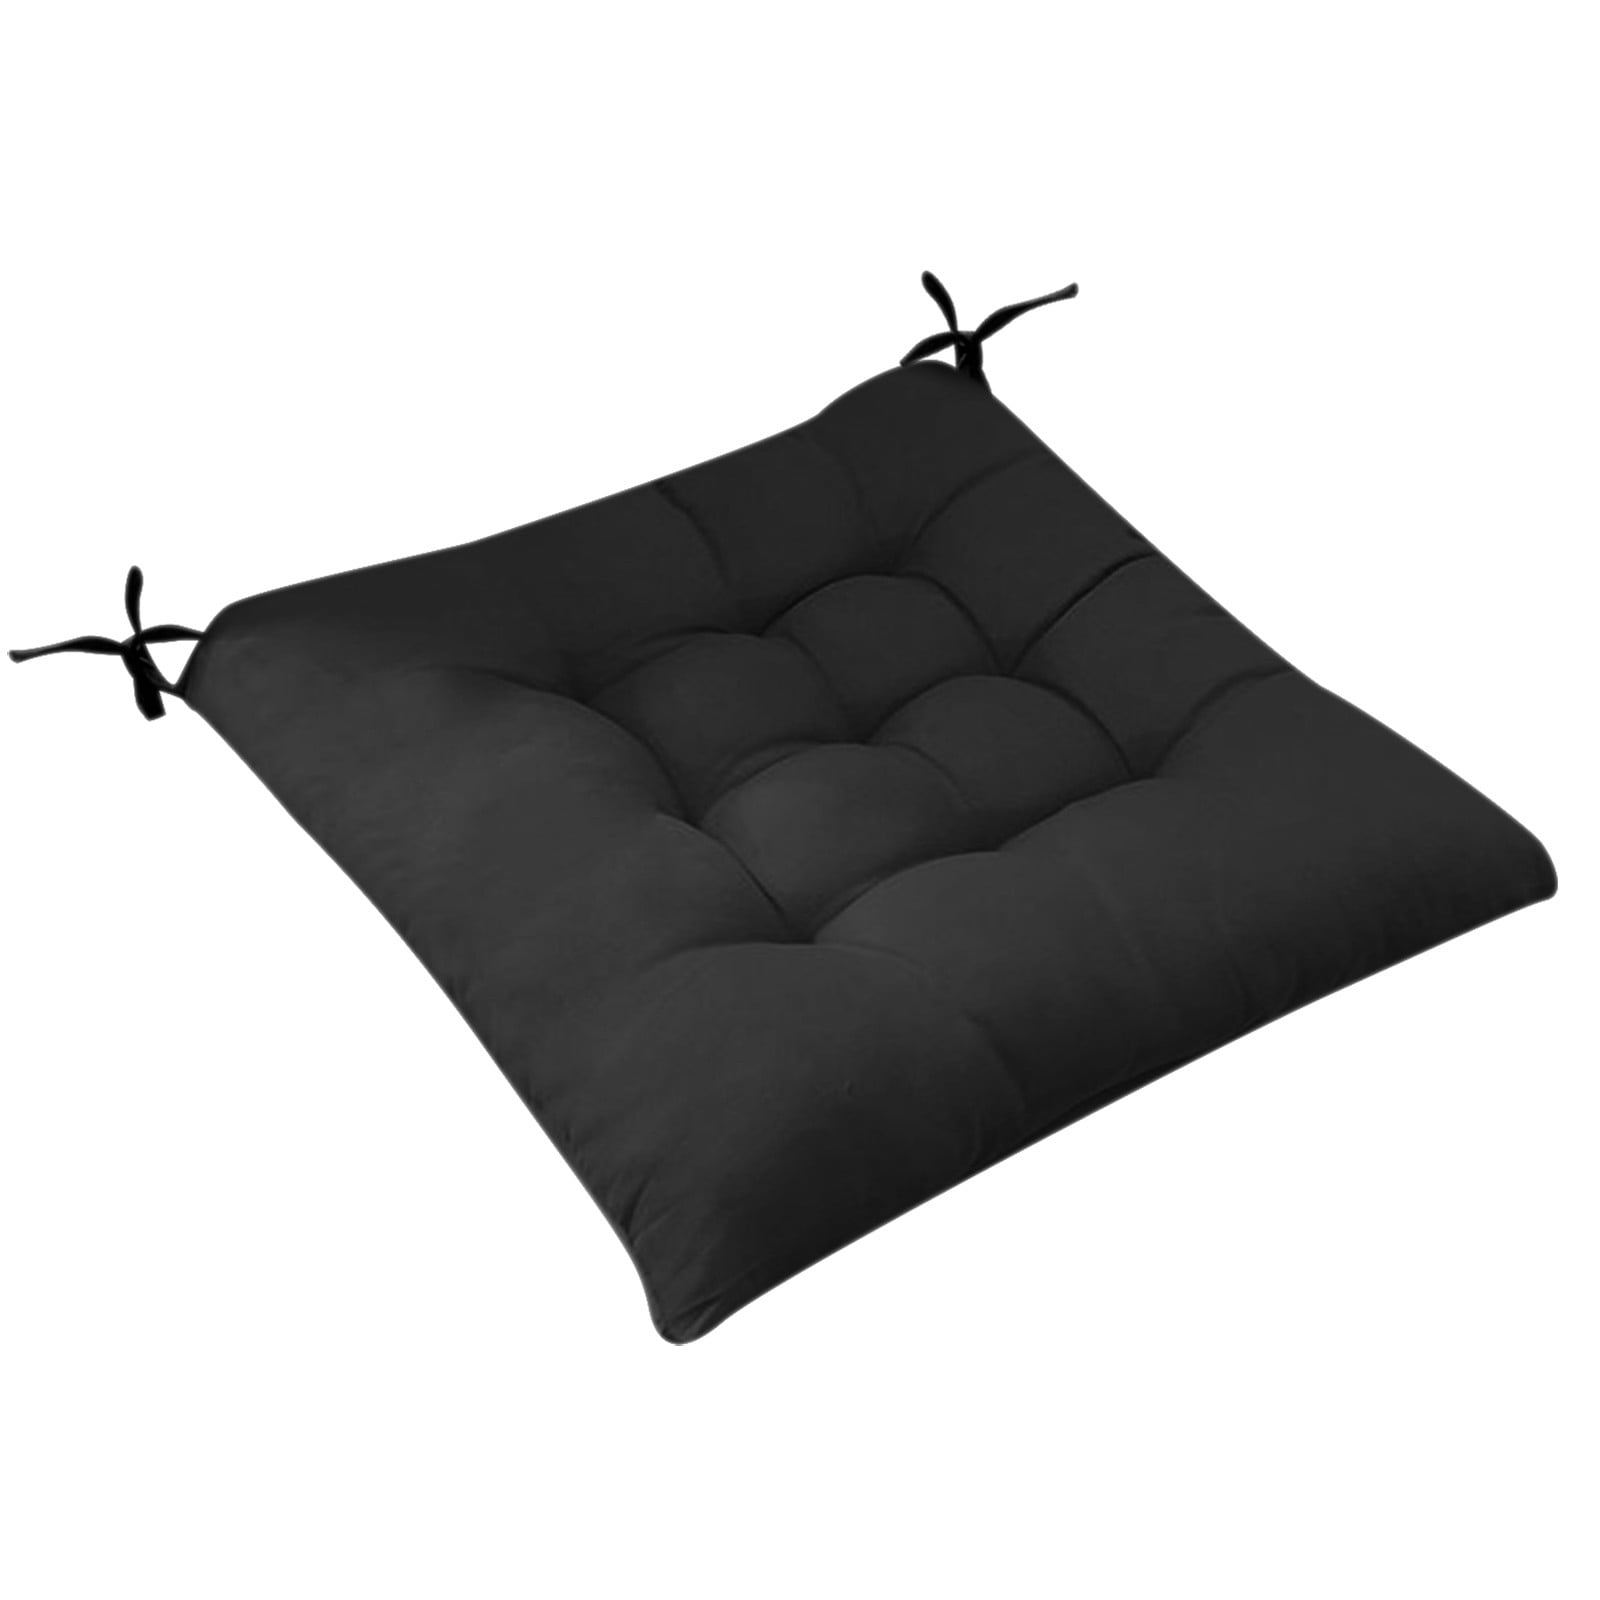  Verpert Floor Pillow 25x25 Inch,Square Meditation